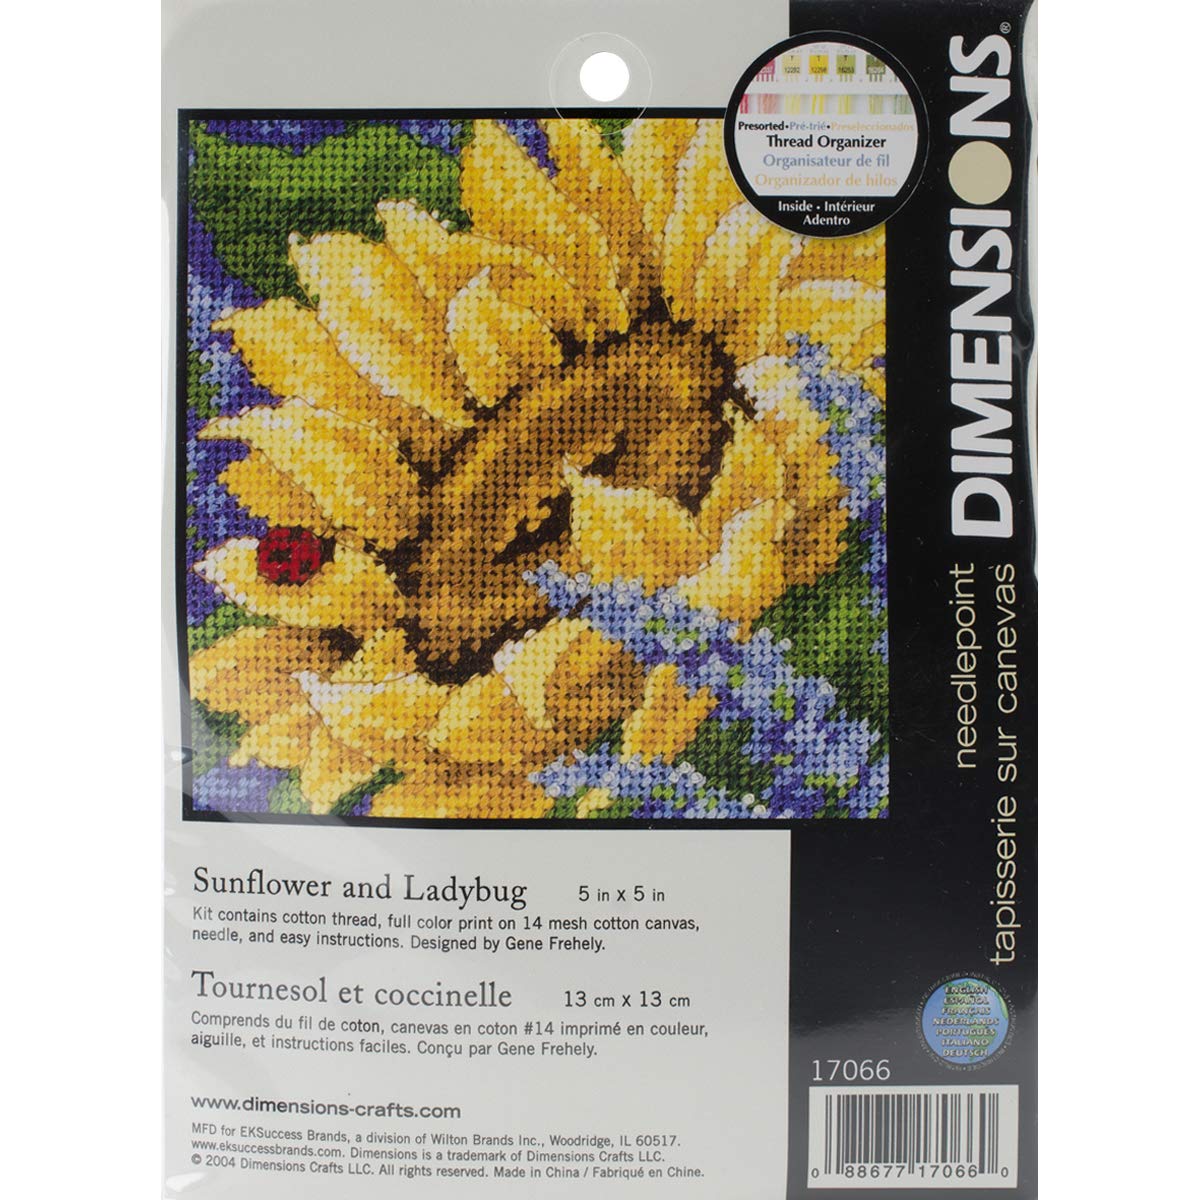 Dimensions Needlepoint Kit Sunflower and Ladybug Floral Needlepoint 5 x 5